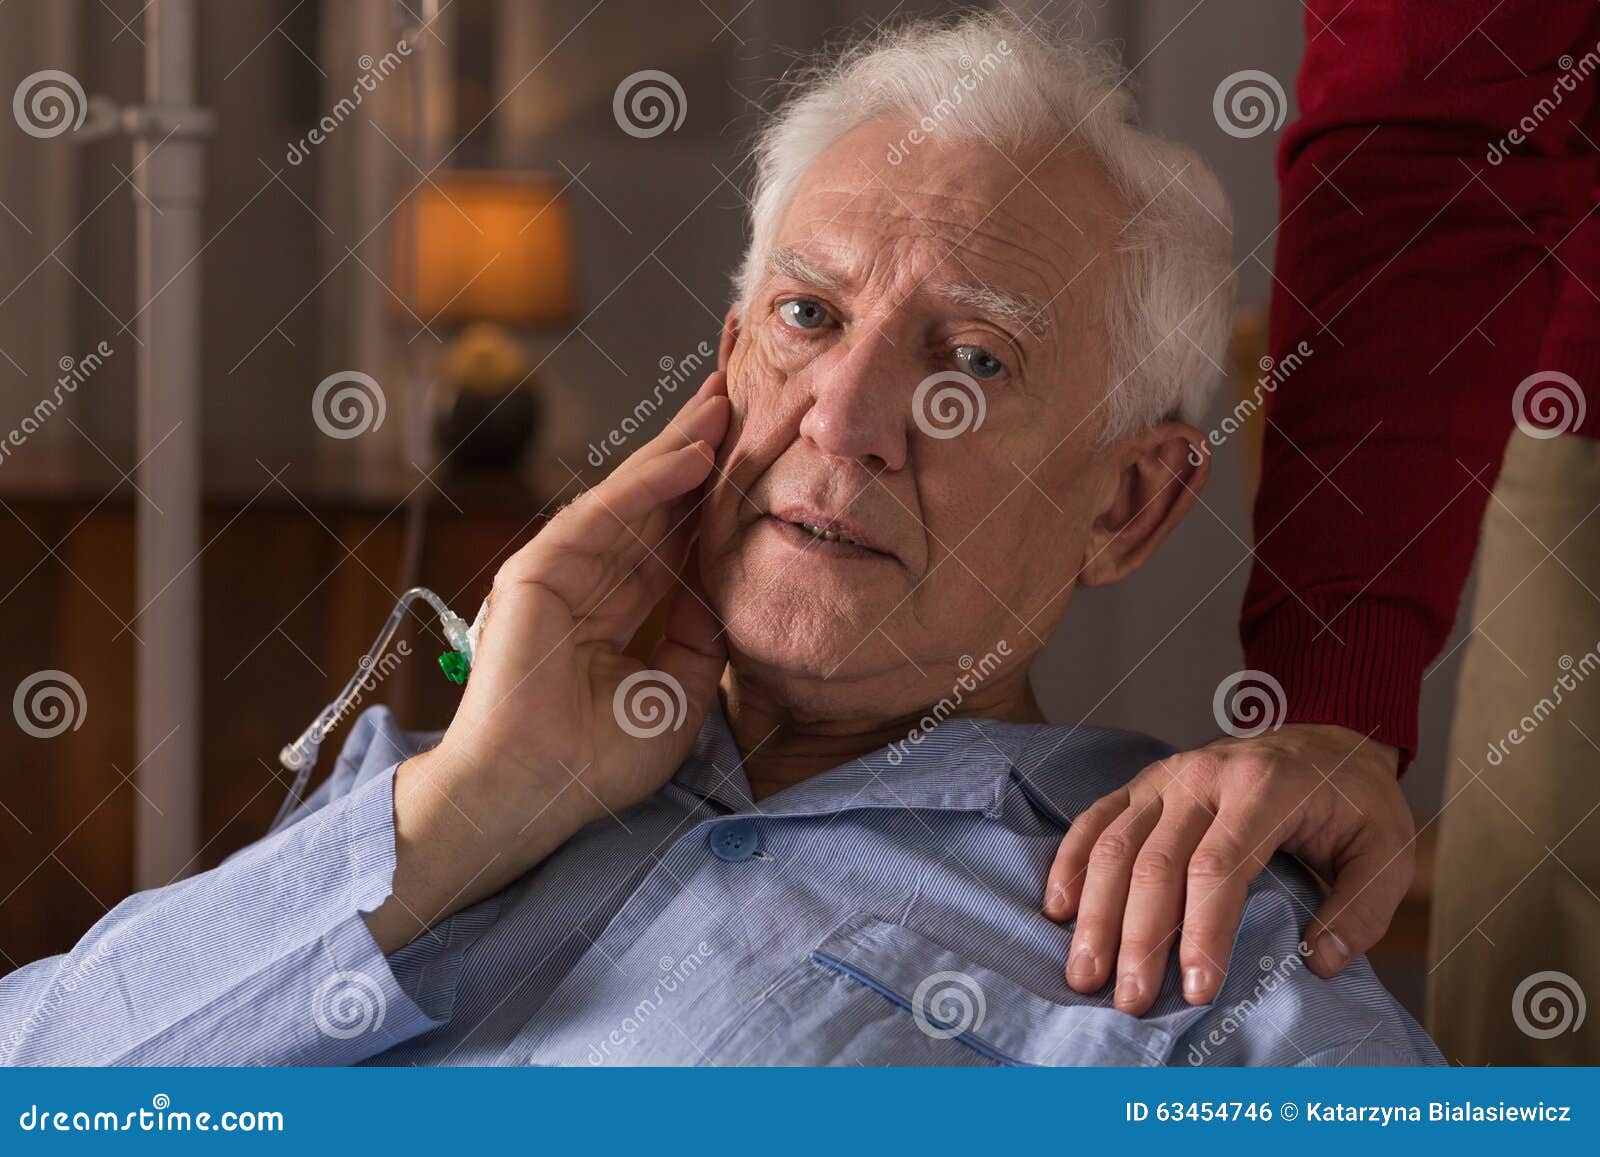 elderly man suffering from dementia